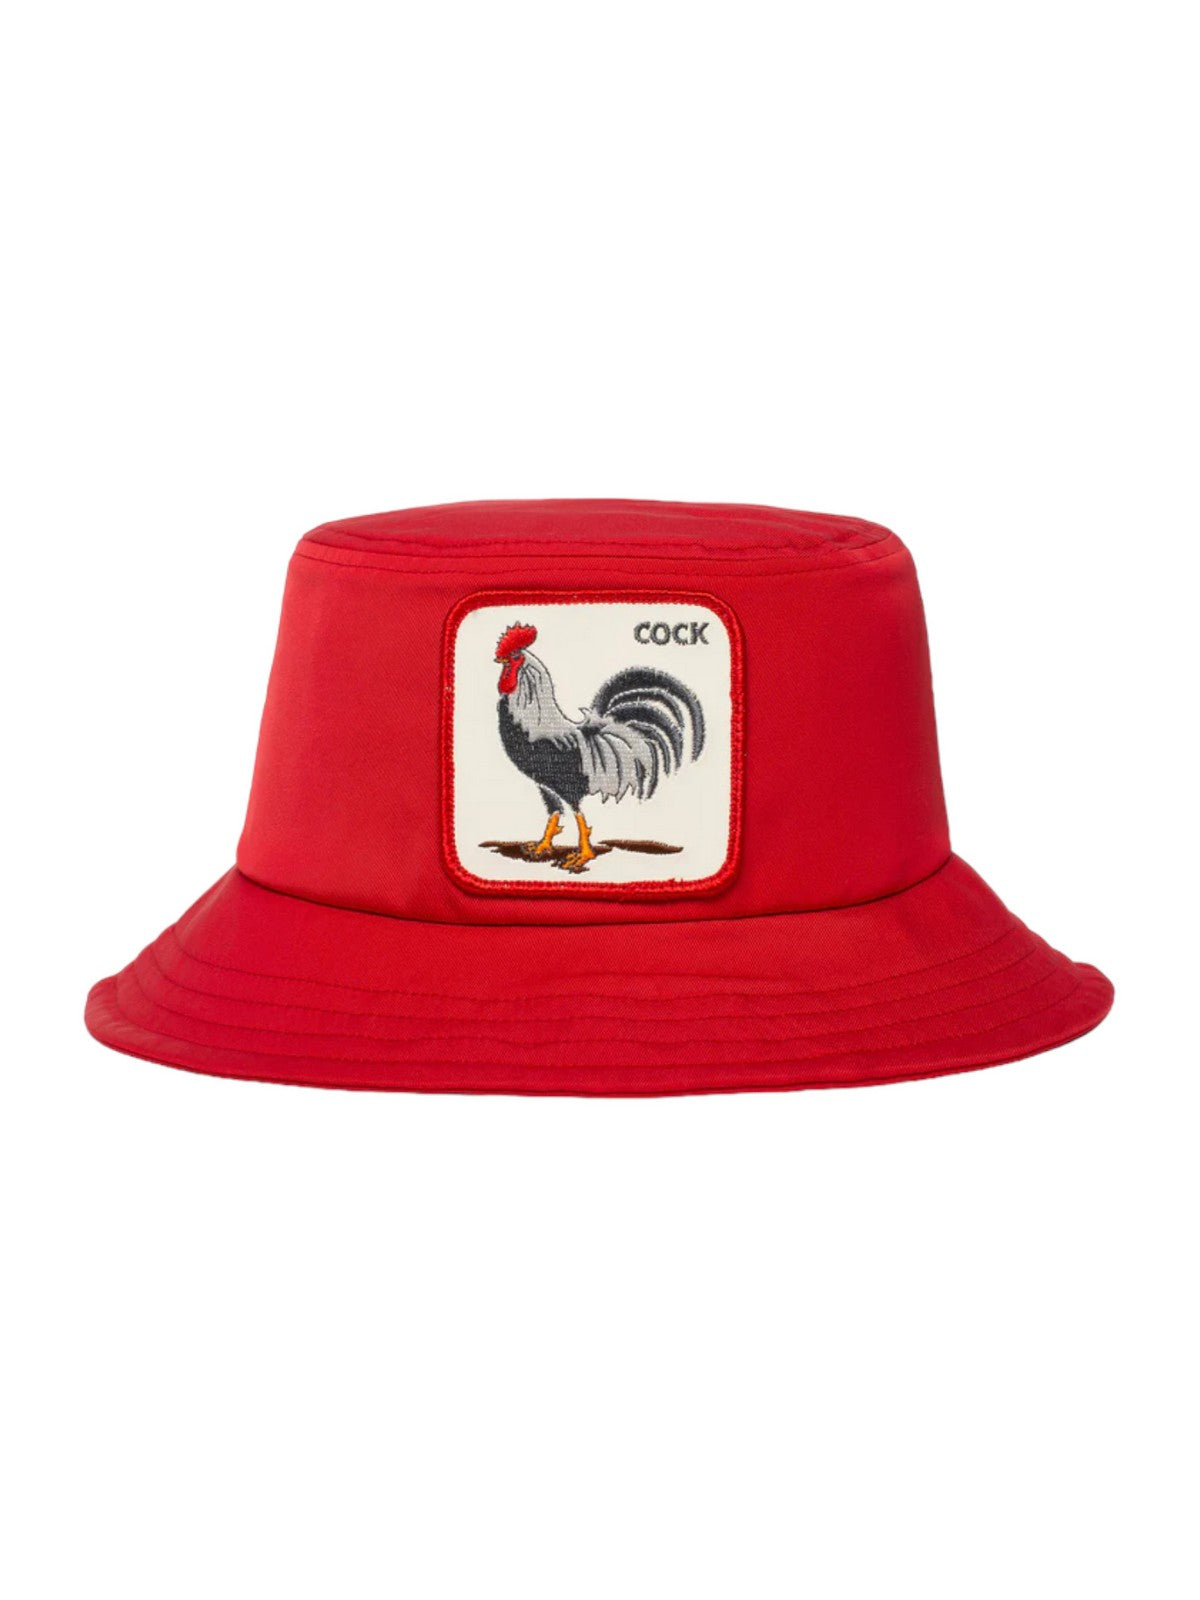 GOORIN BROS Cappello Uomo Bucktown rooster 105-0132-RED Rosso